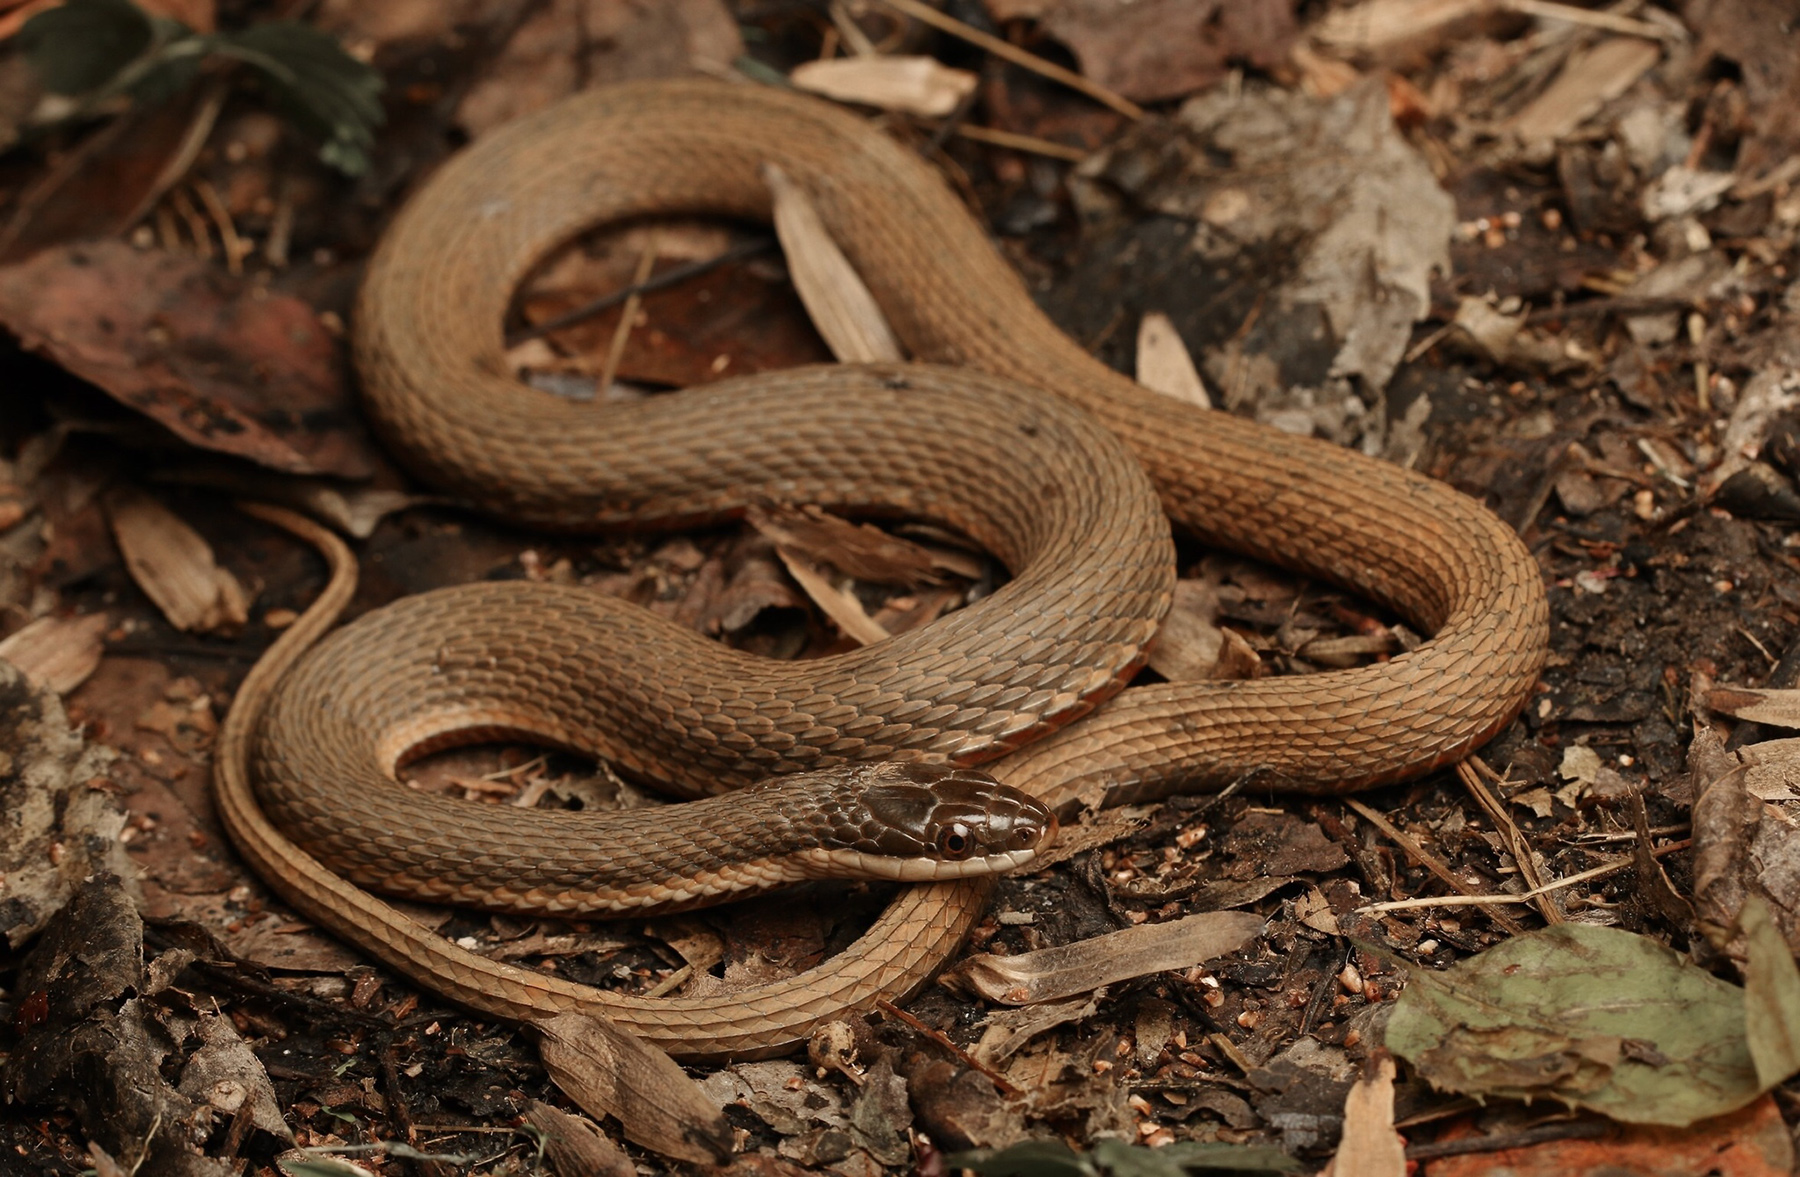 Queensnake – Florida Snake ID Guide